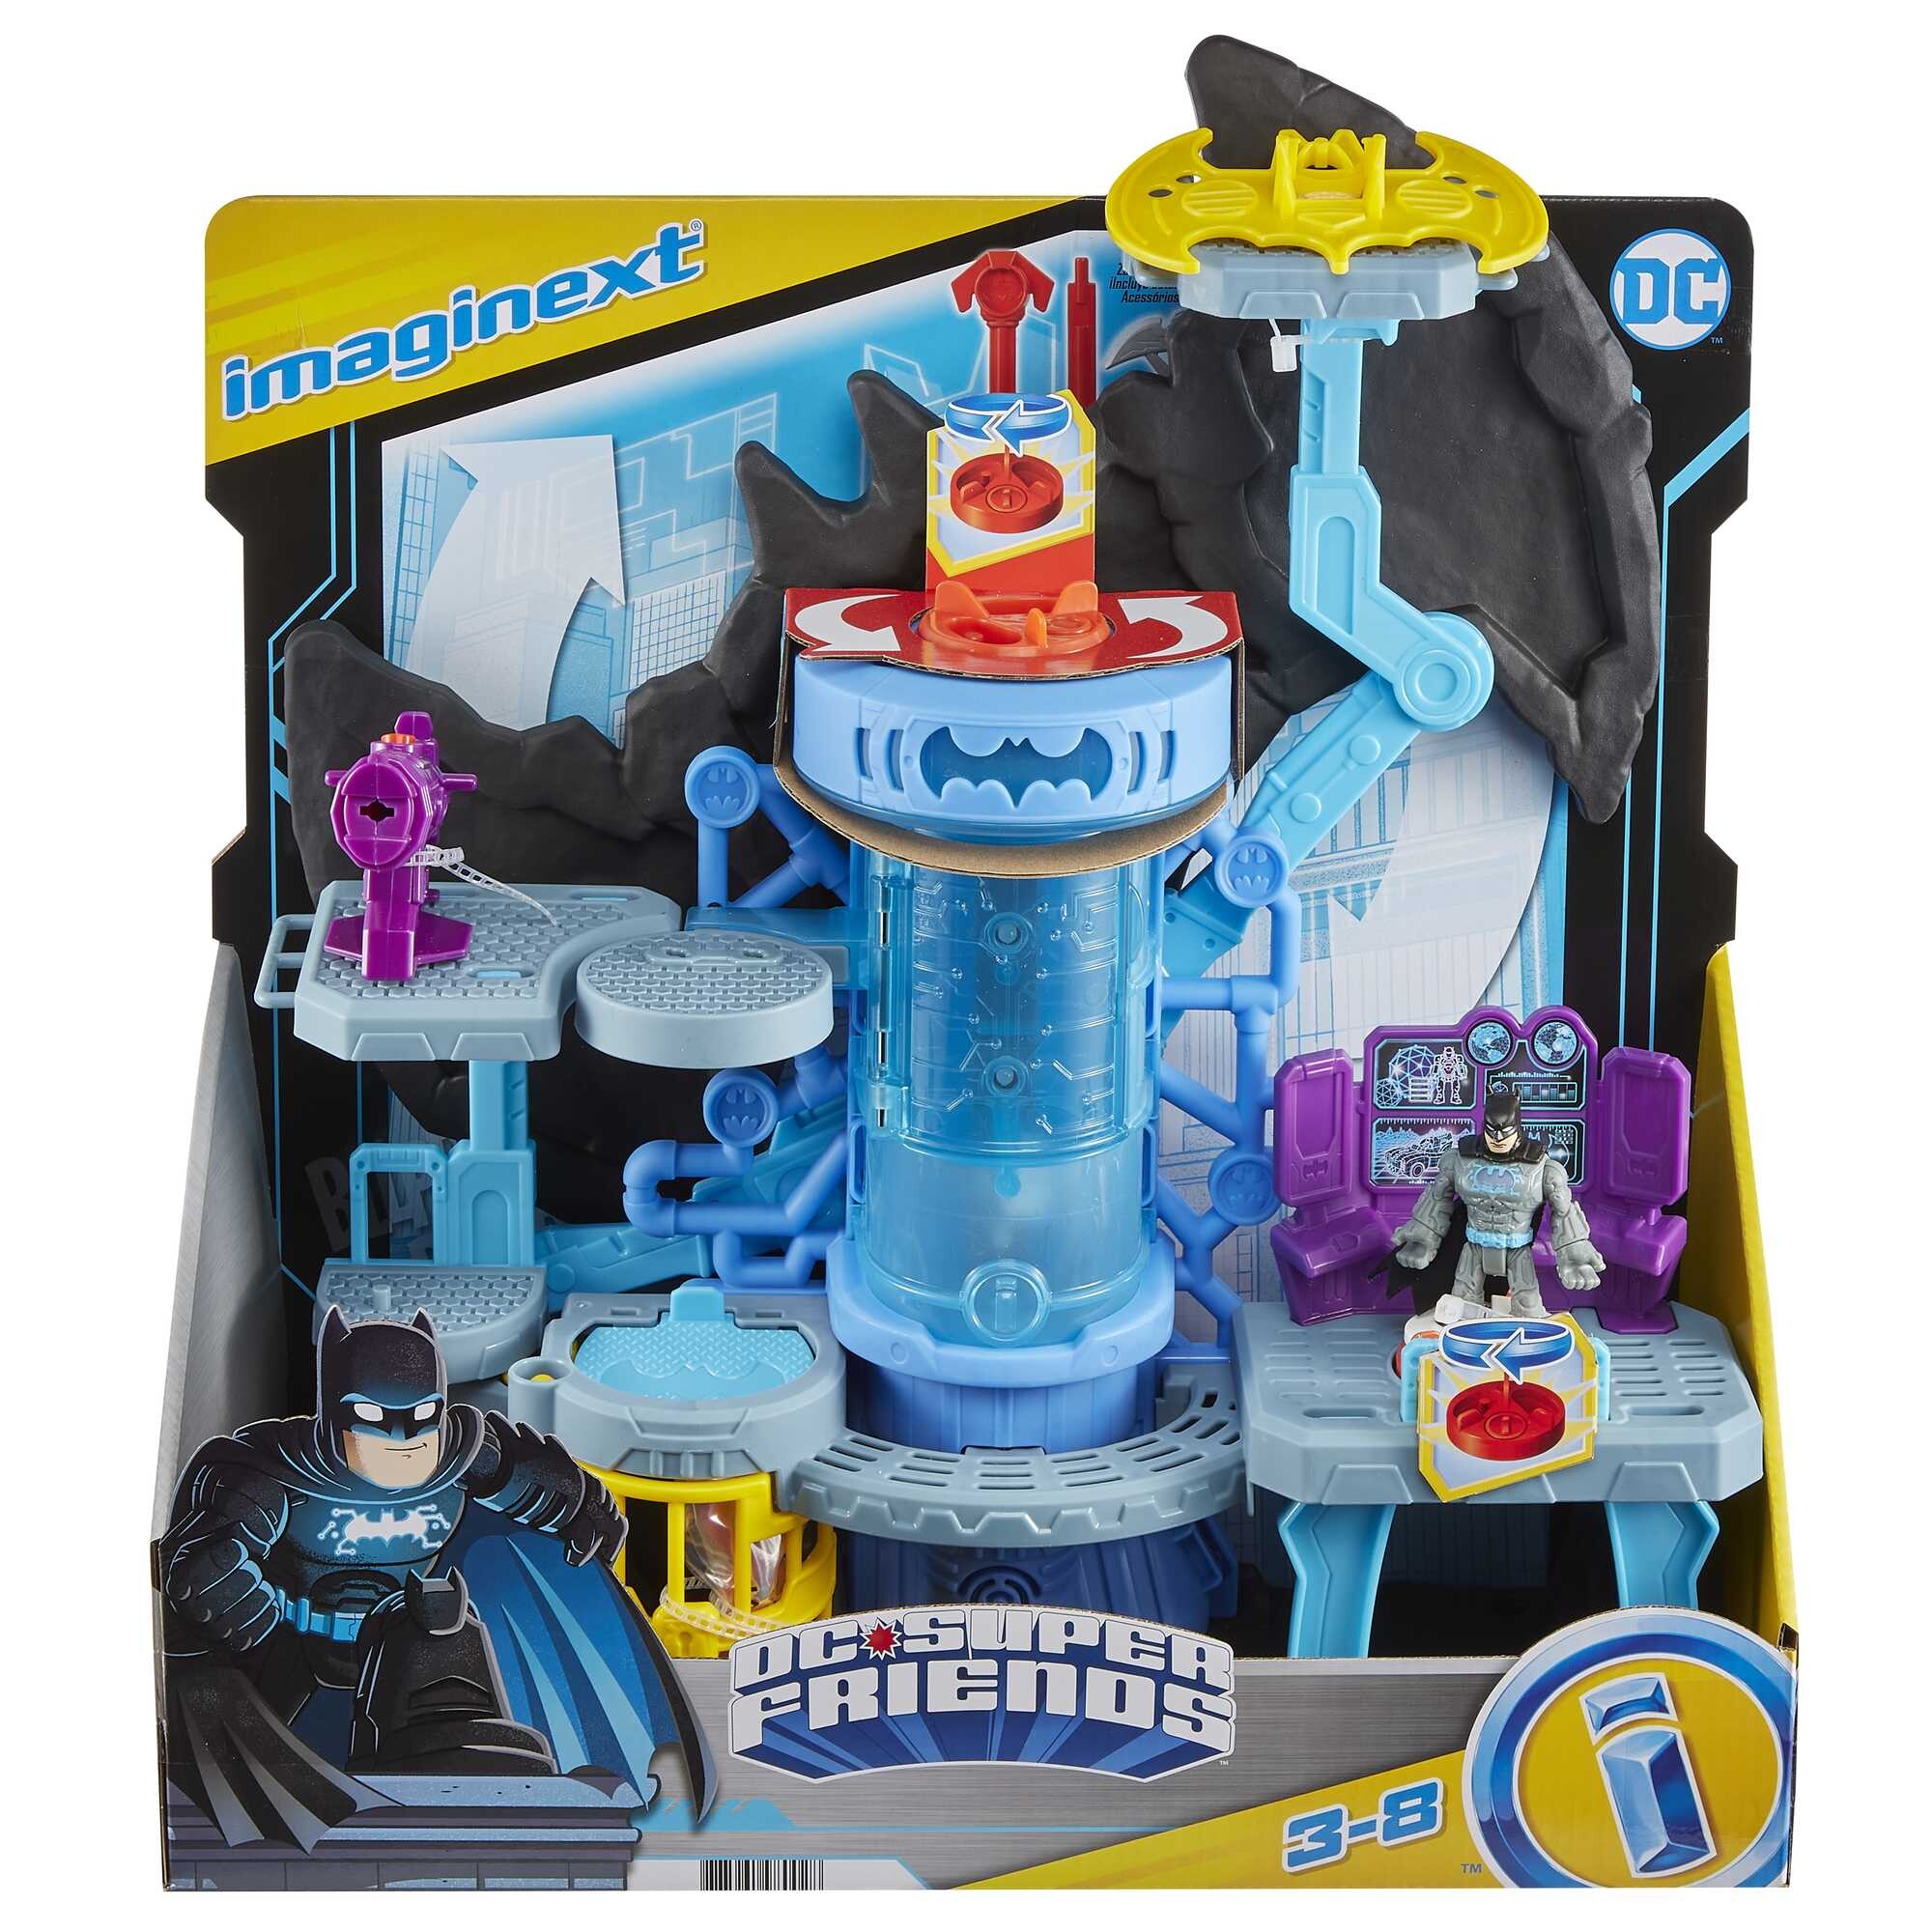 Imaginext dc super friends batcaverna bat-tech, playset di batman con luci e suoni; per bambini da 3 a 8 anni - IMAGINEXT